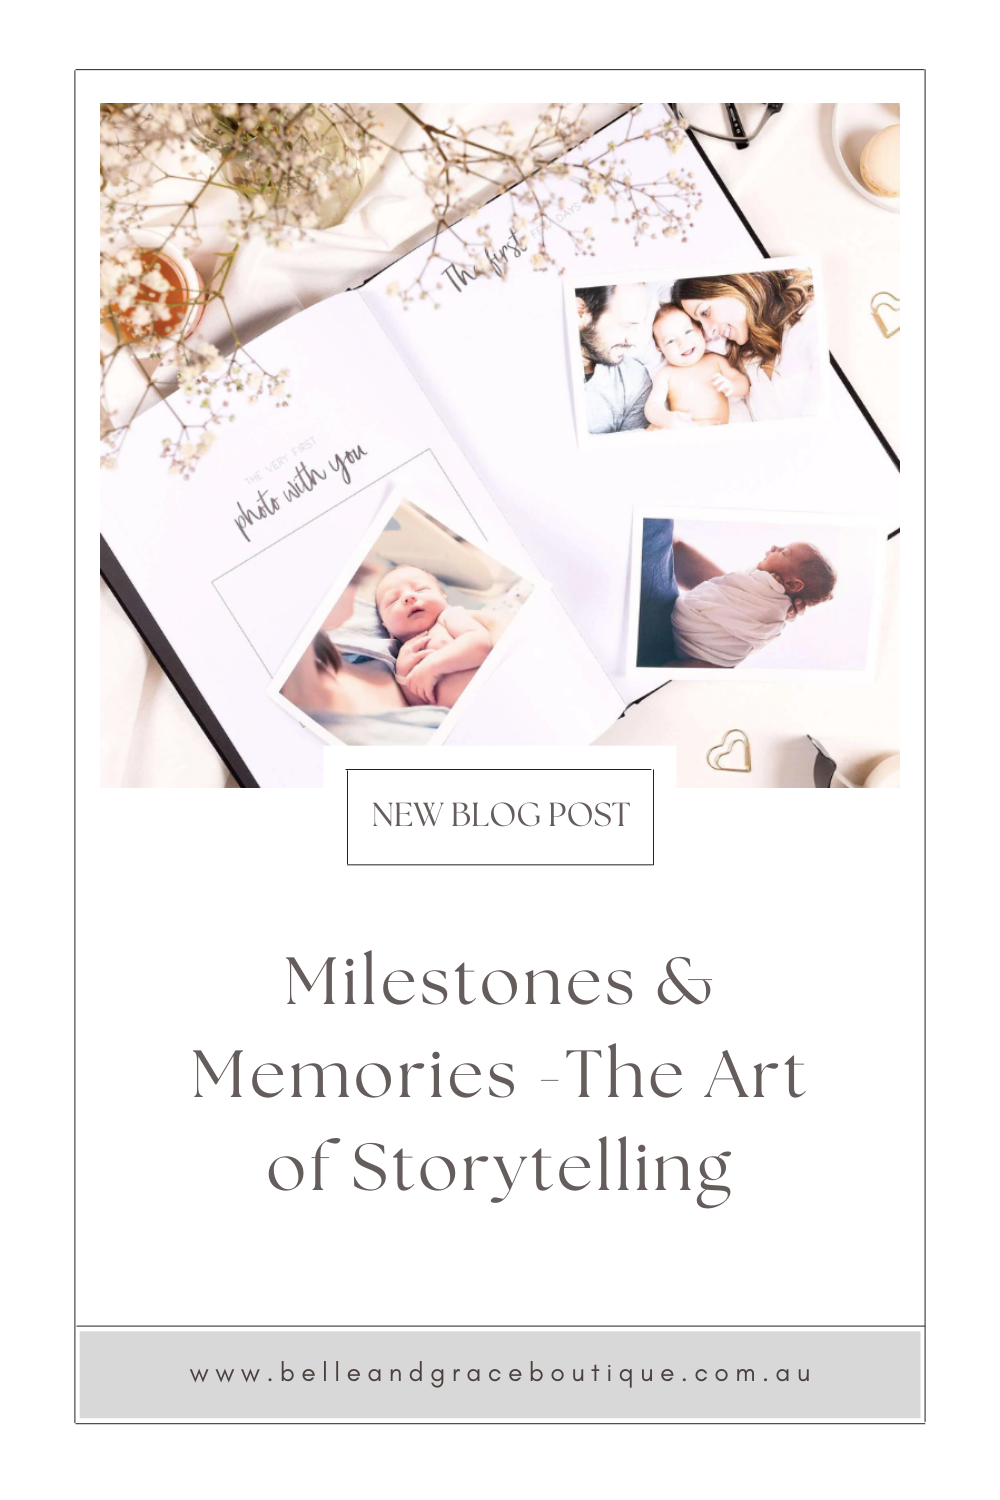 Milestones & Memories - The Art of Storytelling